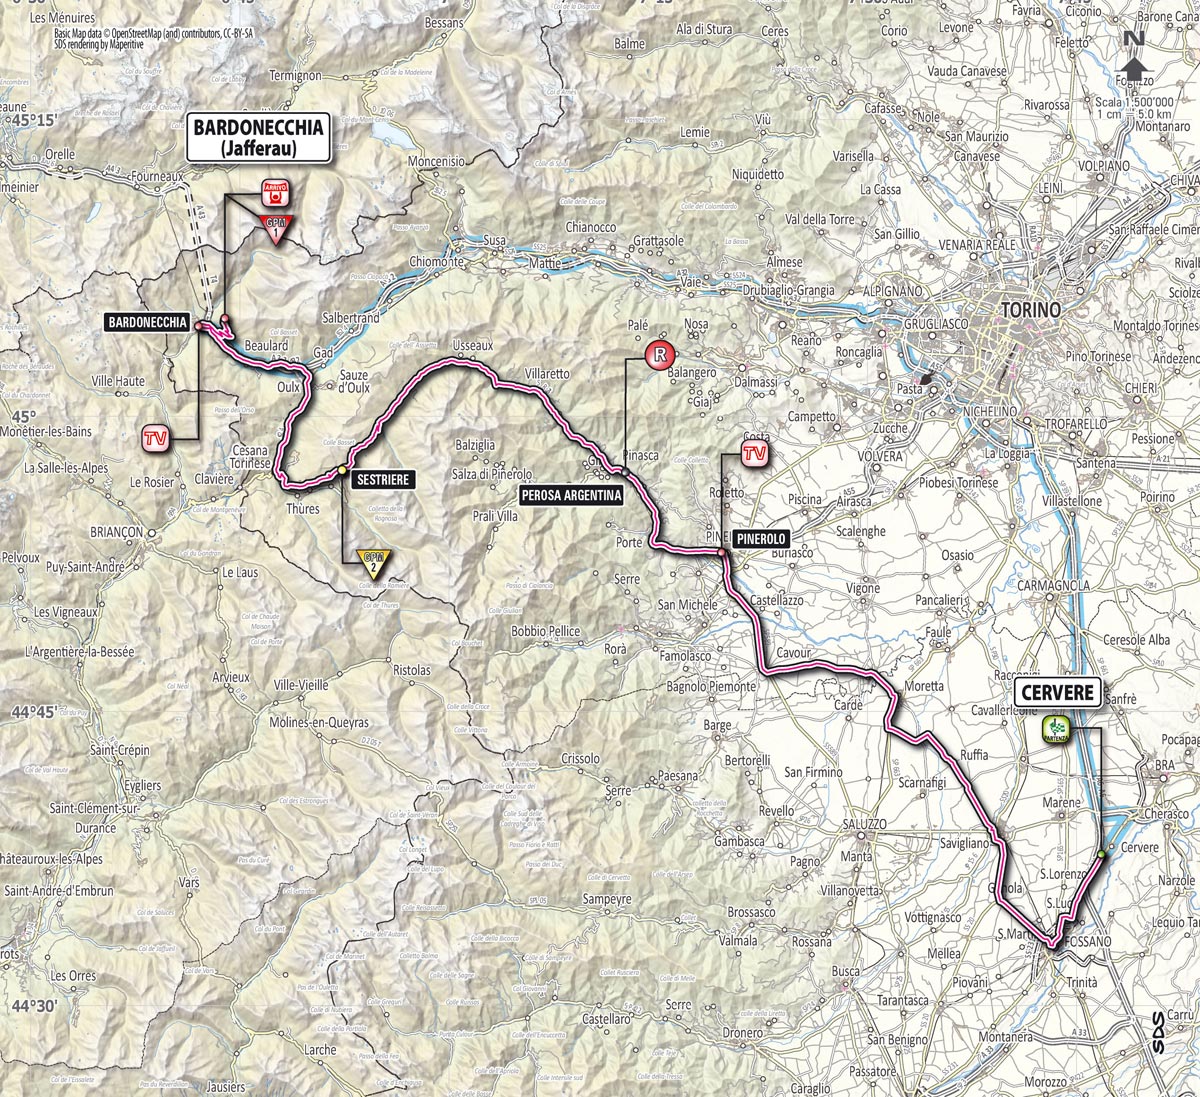 Giro d'Italia 2013 stage 14 map